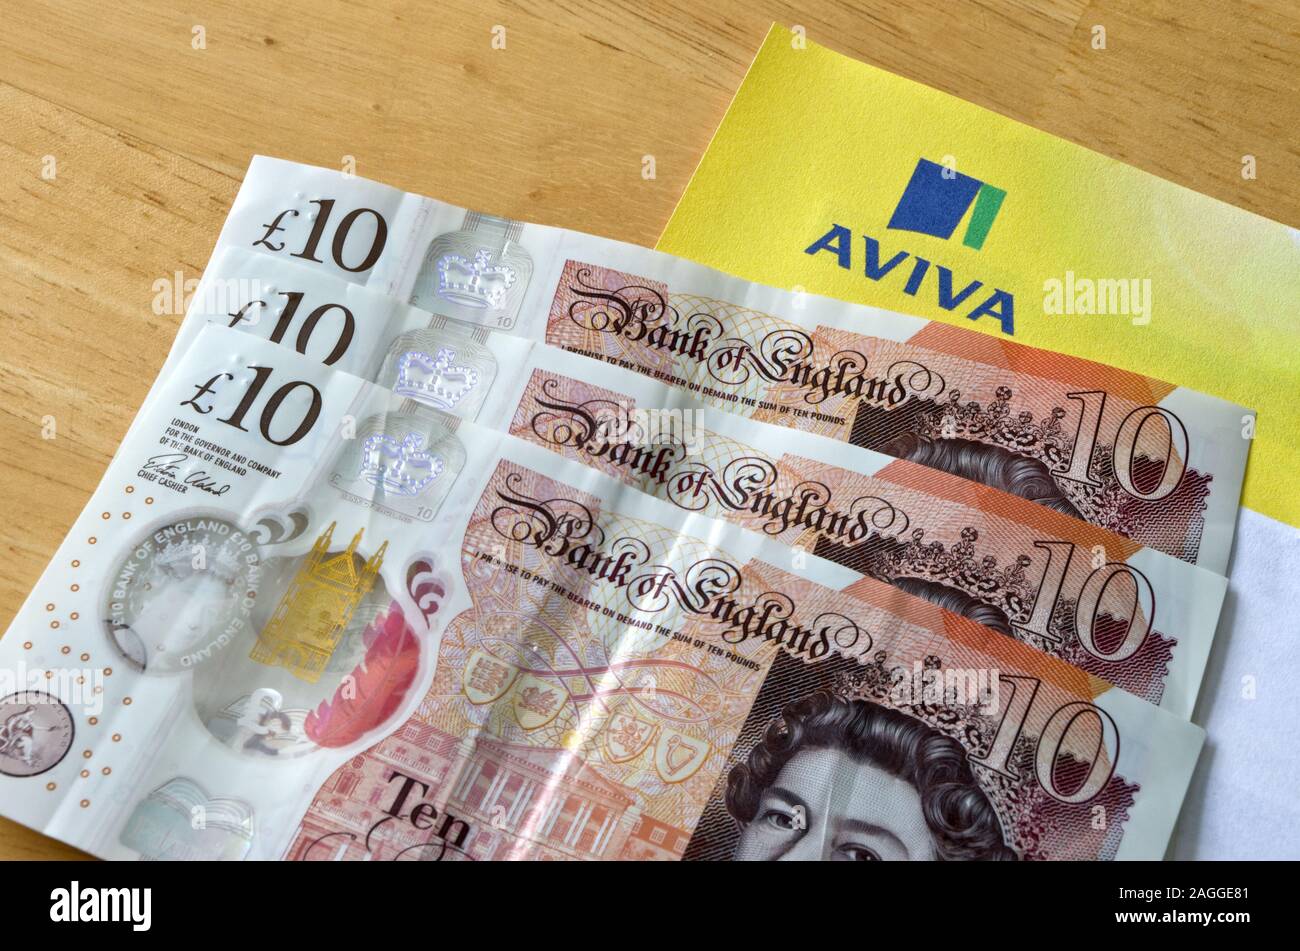 Aviva Insurance & Finance Company With Cash, UK Stock Photo